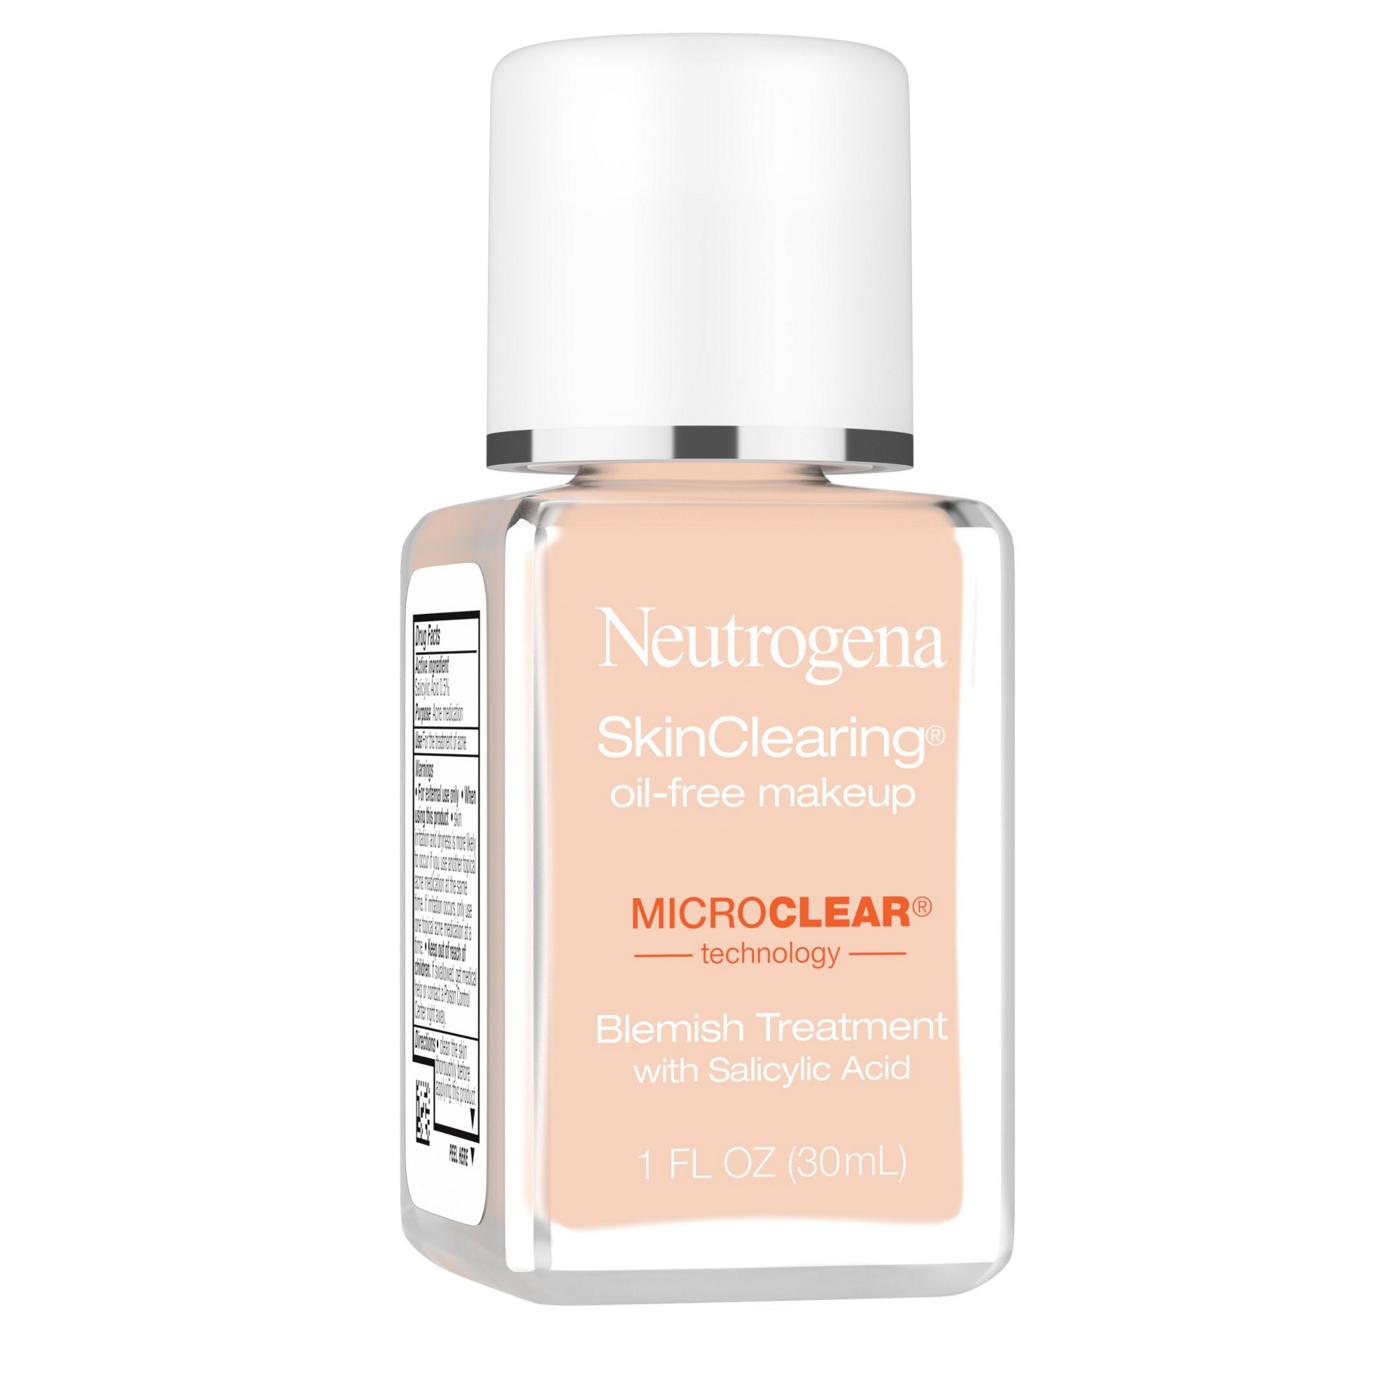 Neutrogena Skinclearing Makeup 80 Medium Beige; image 5 of 7